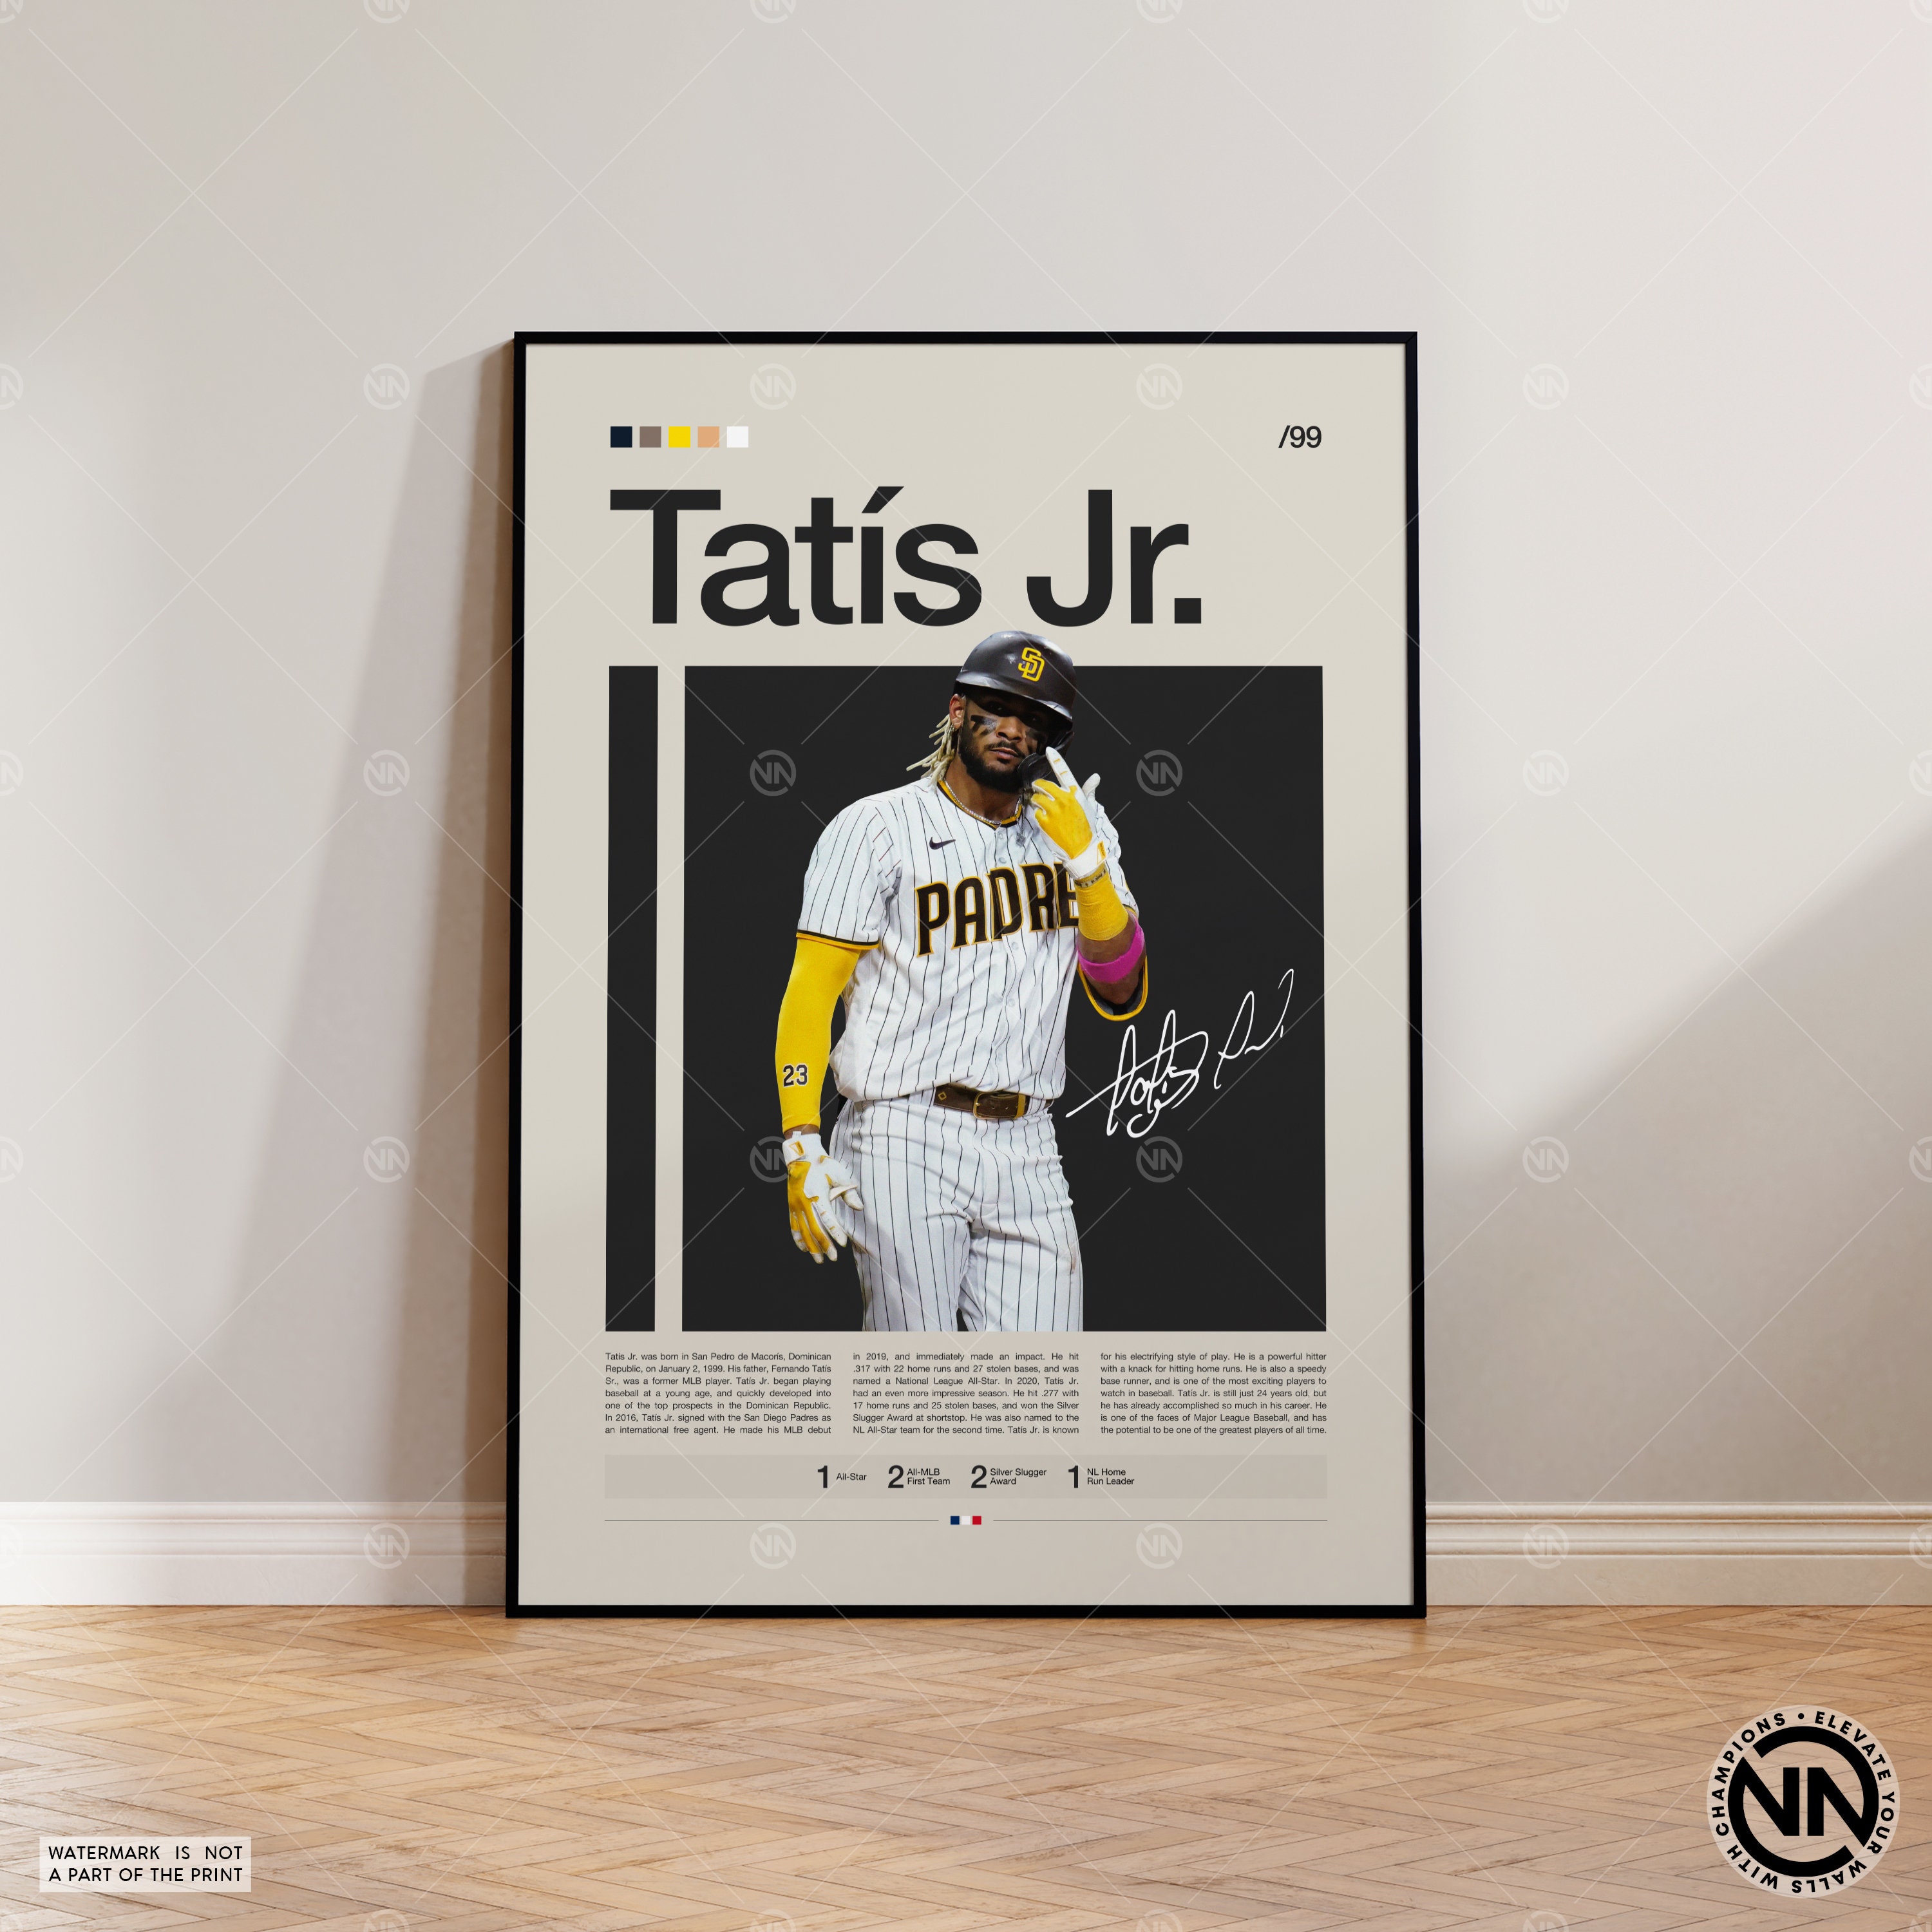 Fernando Tatis Jr. San Diego Padres Baseball Art Wall Room Poster - POSTER  20x30